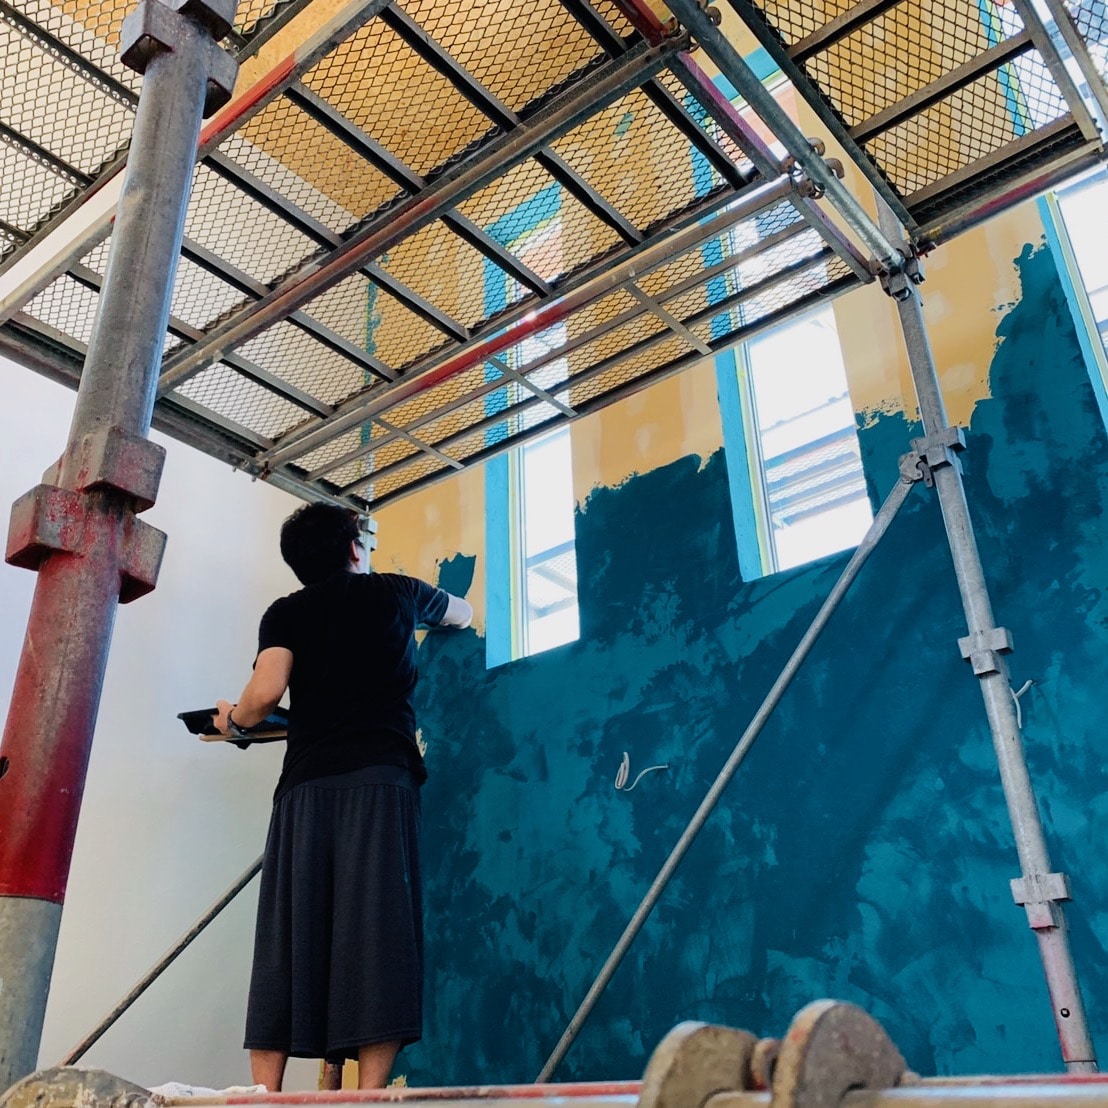 珪藻土 壁 塗り壁 左官 壁材 塗料 DIY U-SELECT  KEISOUDO PLASTER 18kg - 3